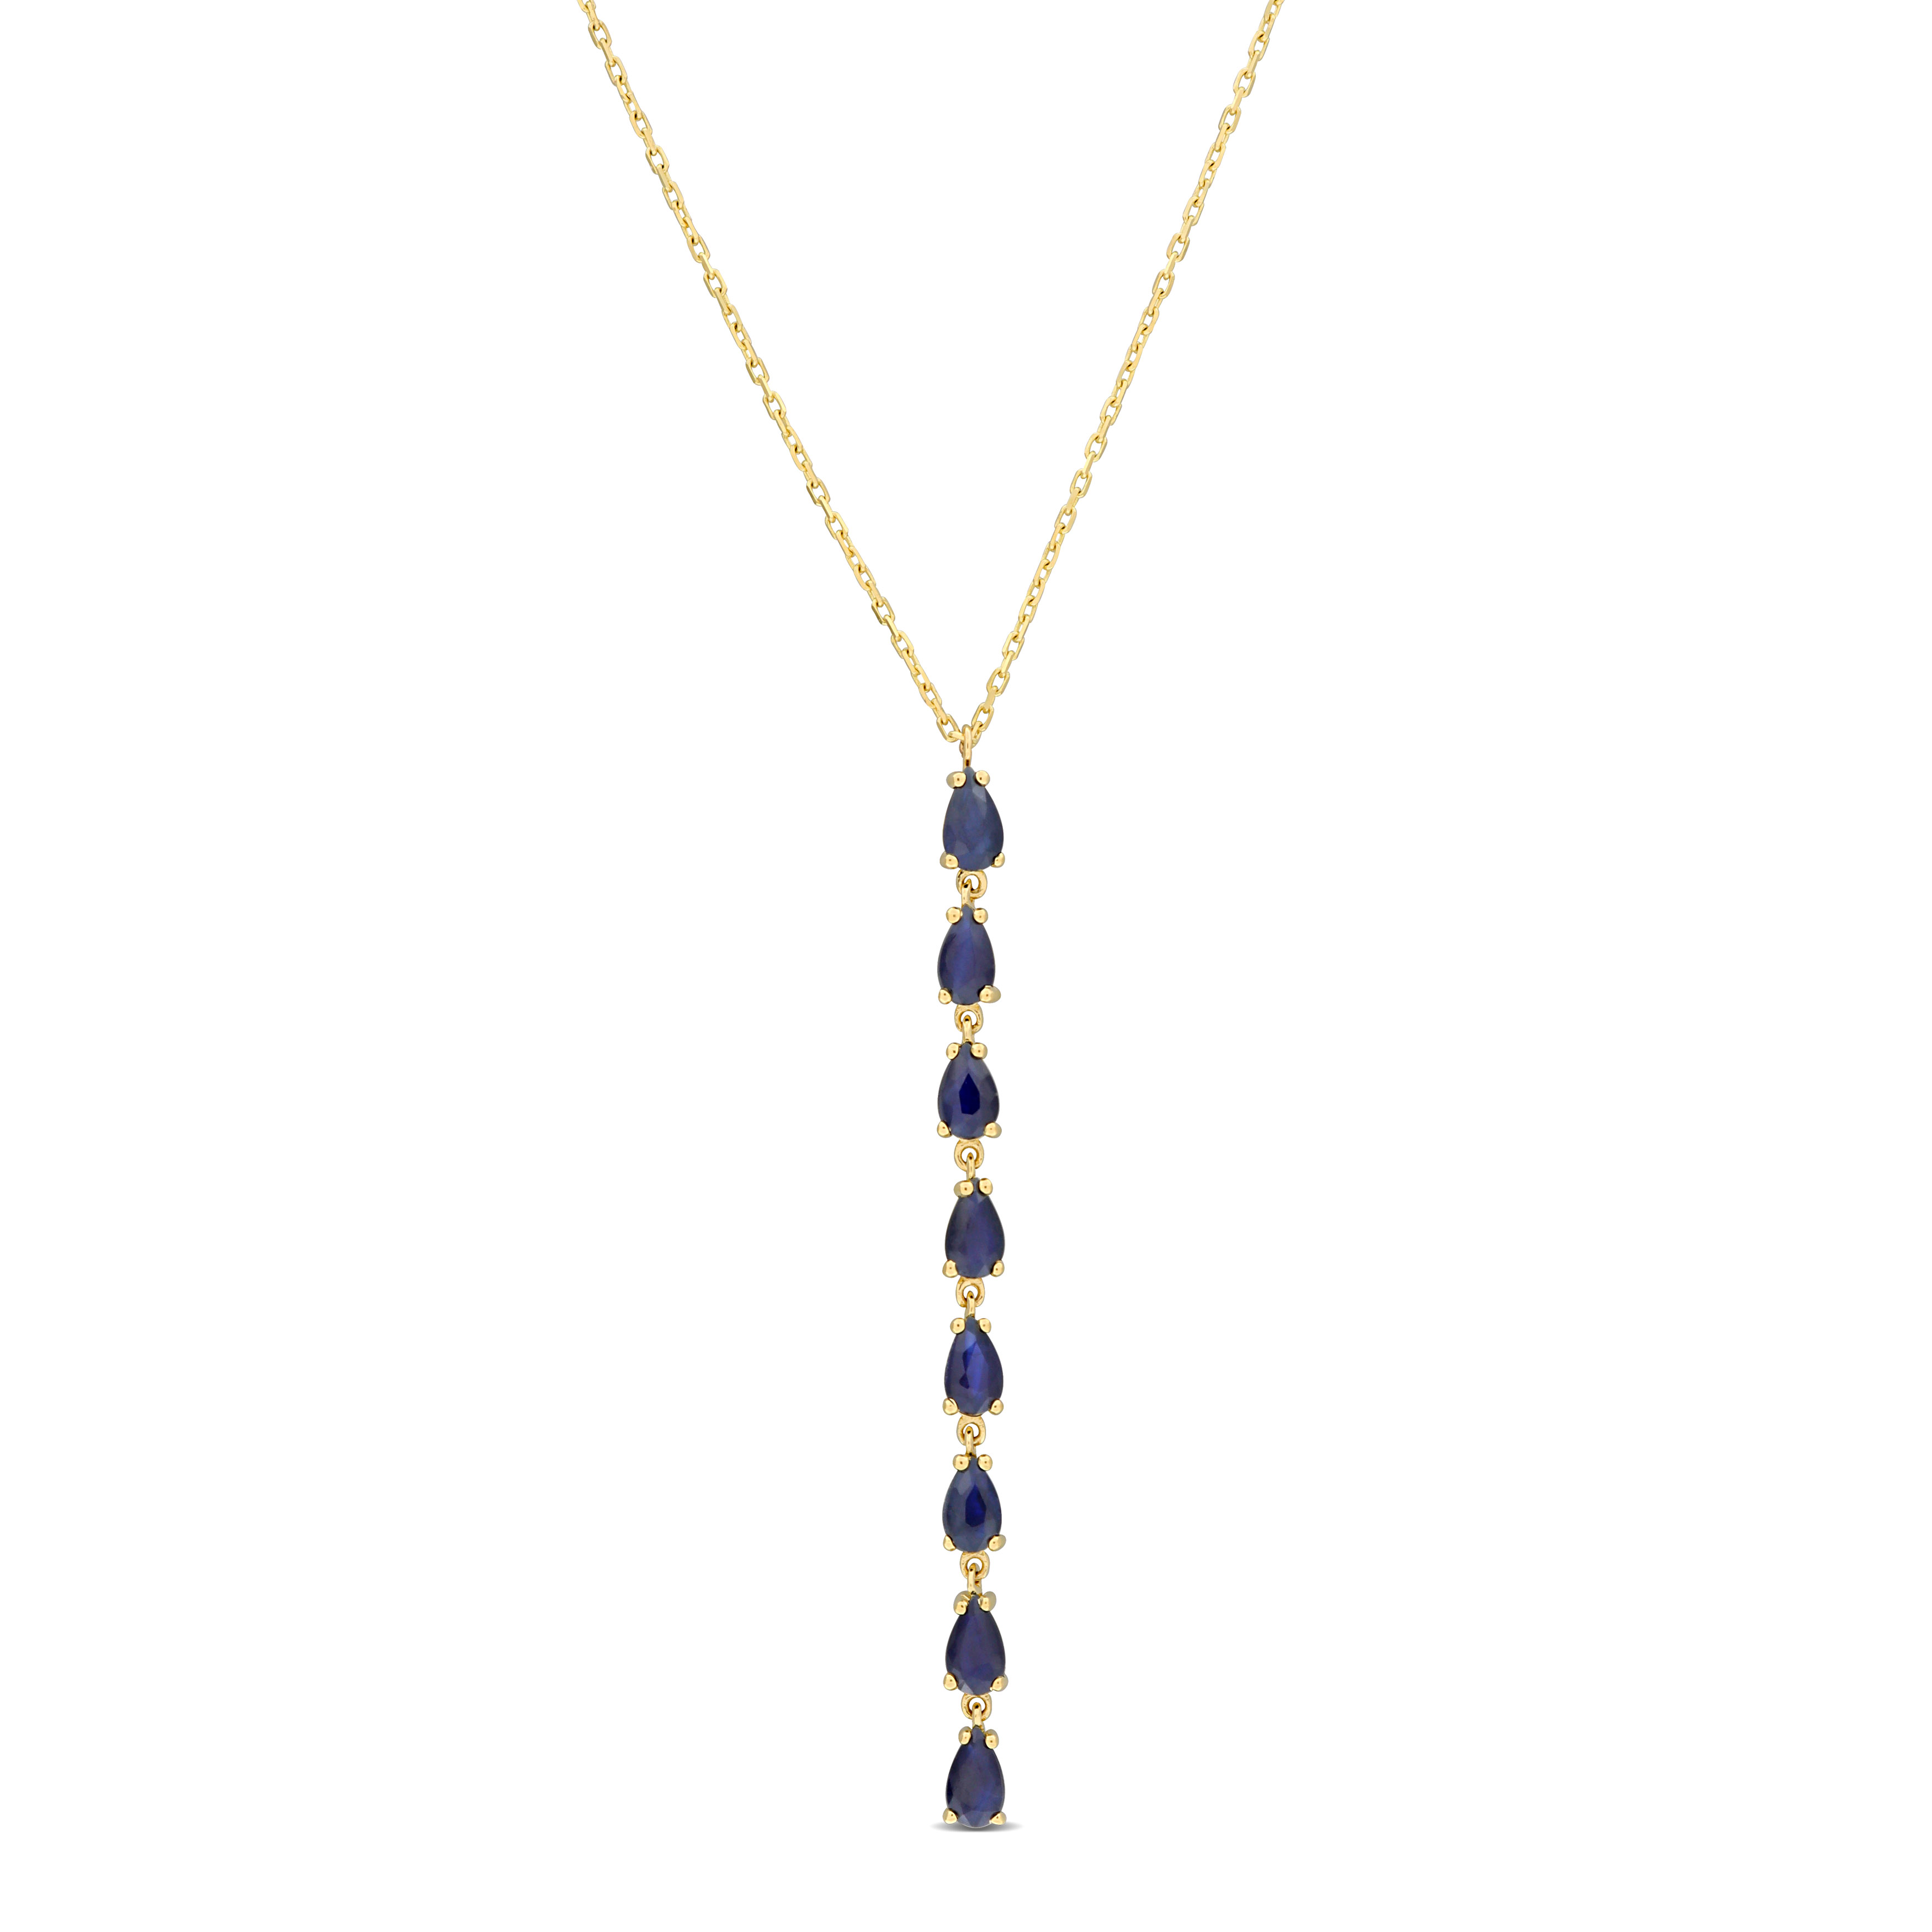 2 CT TGW Pear Shape Blue Sapphire Linear Necklace in 10k Yellow Gold - 16.5 in.